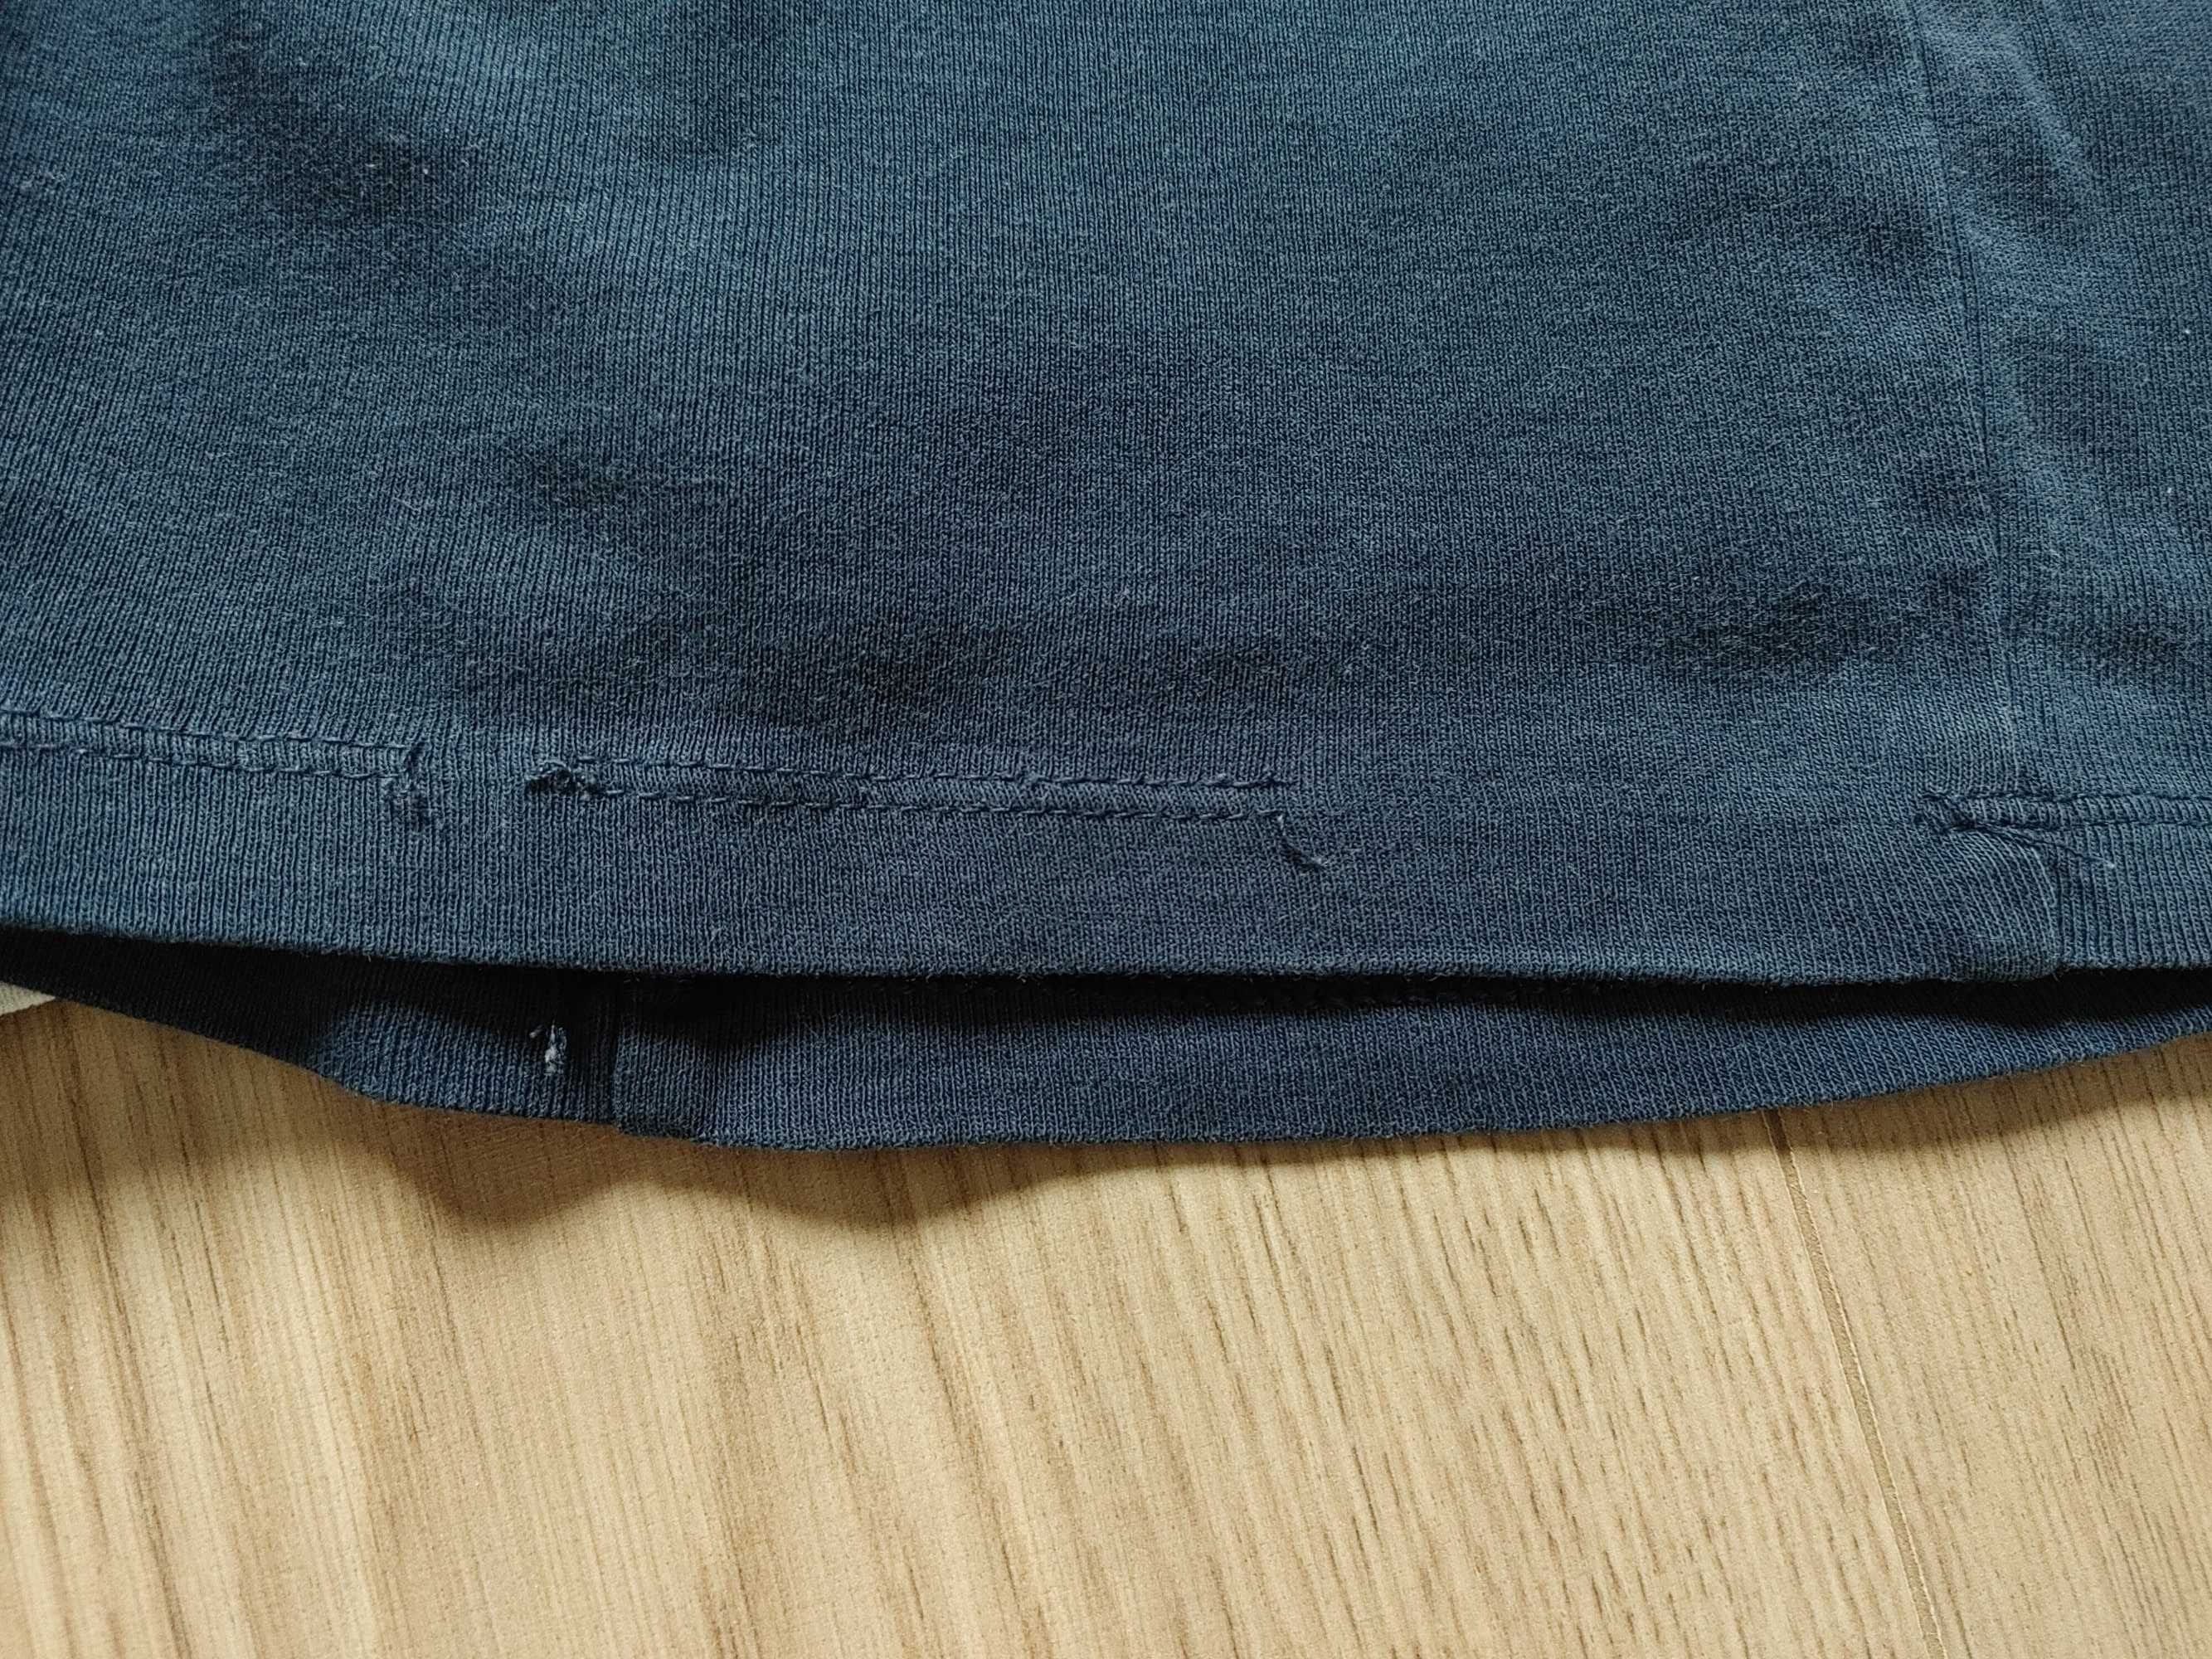 H&M podkoszulka koszulka bez rękawów 98